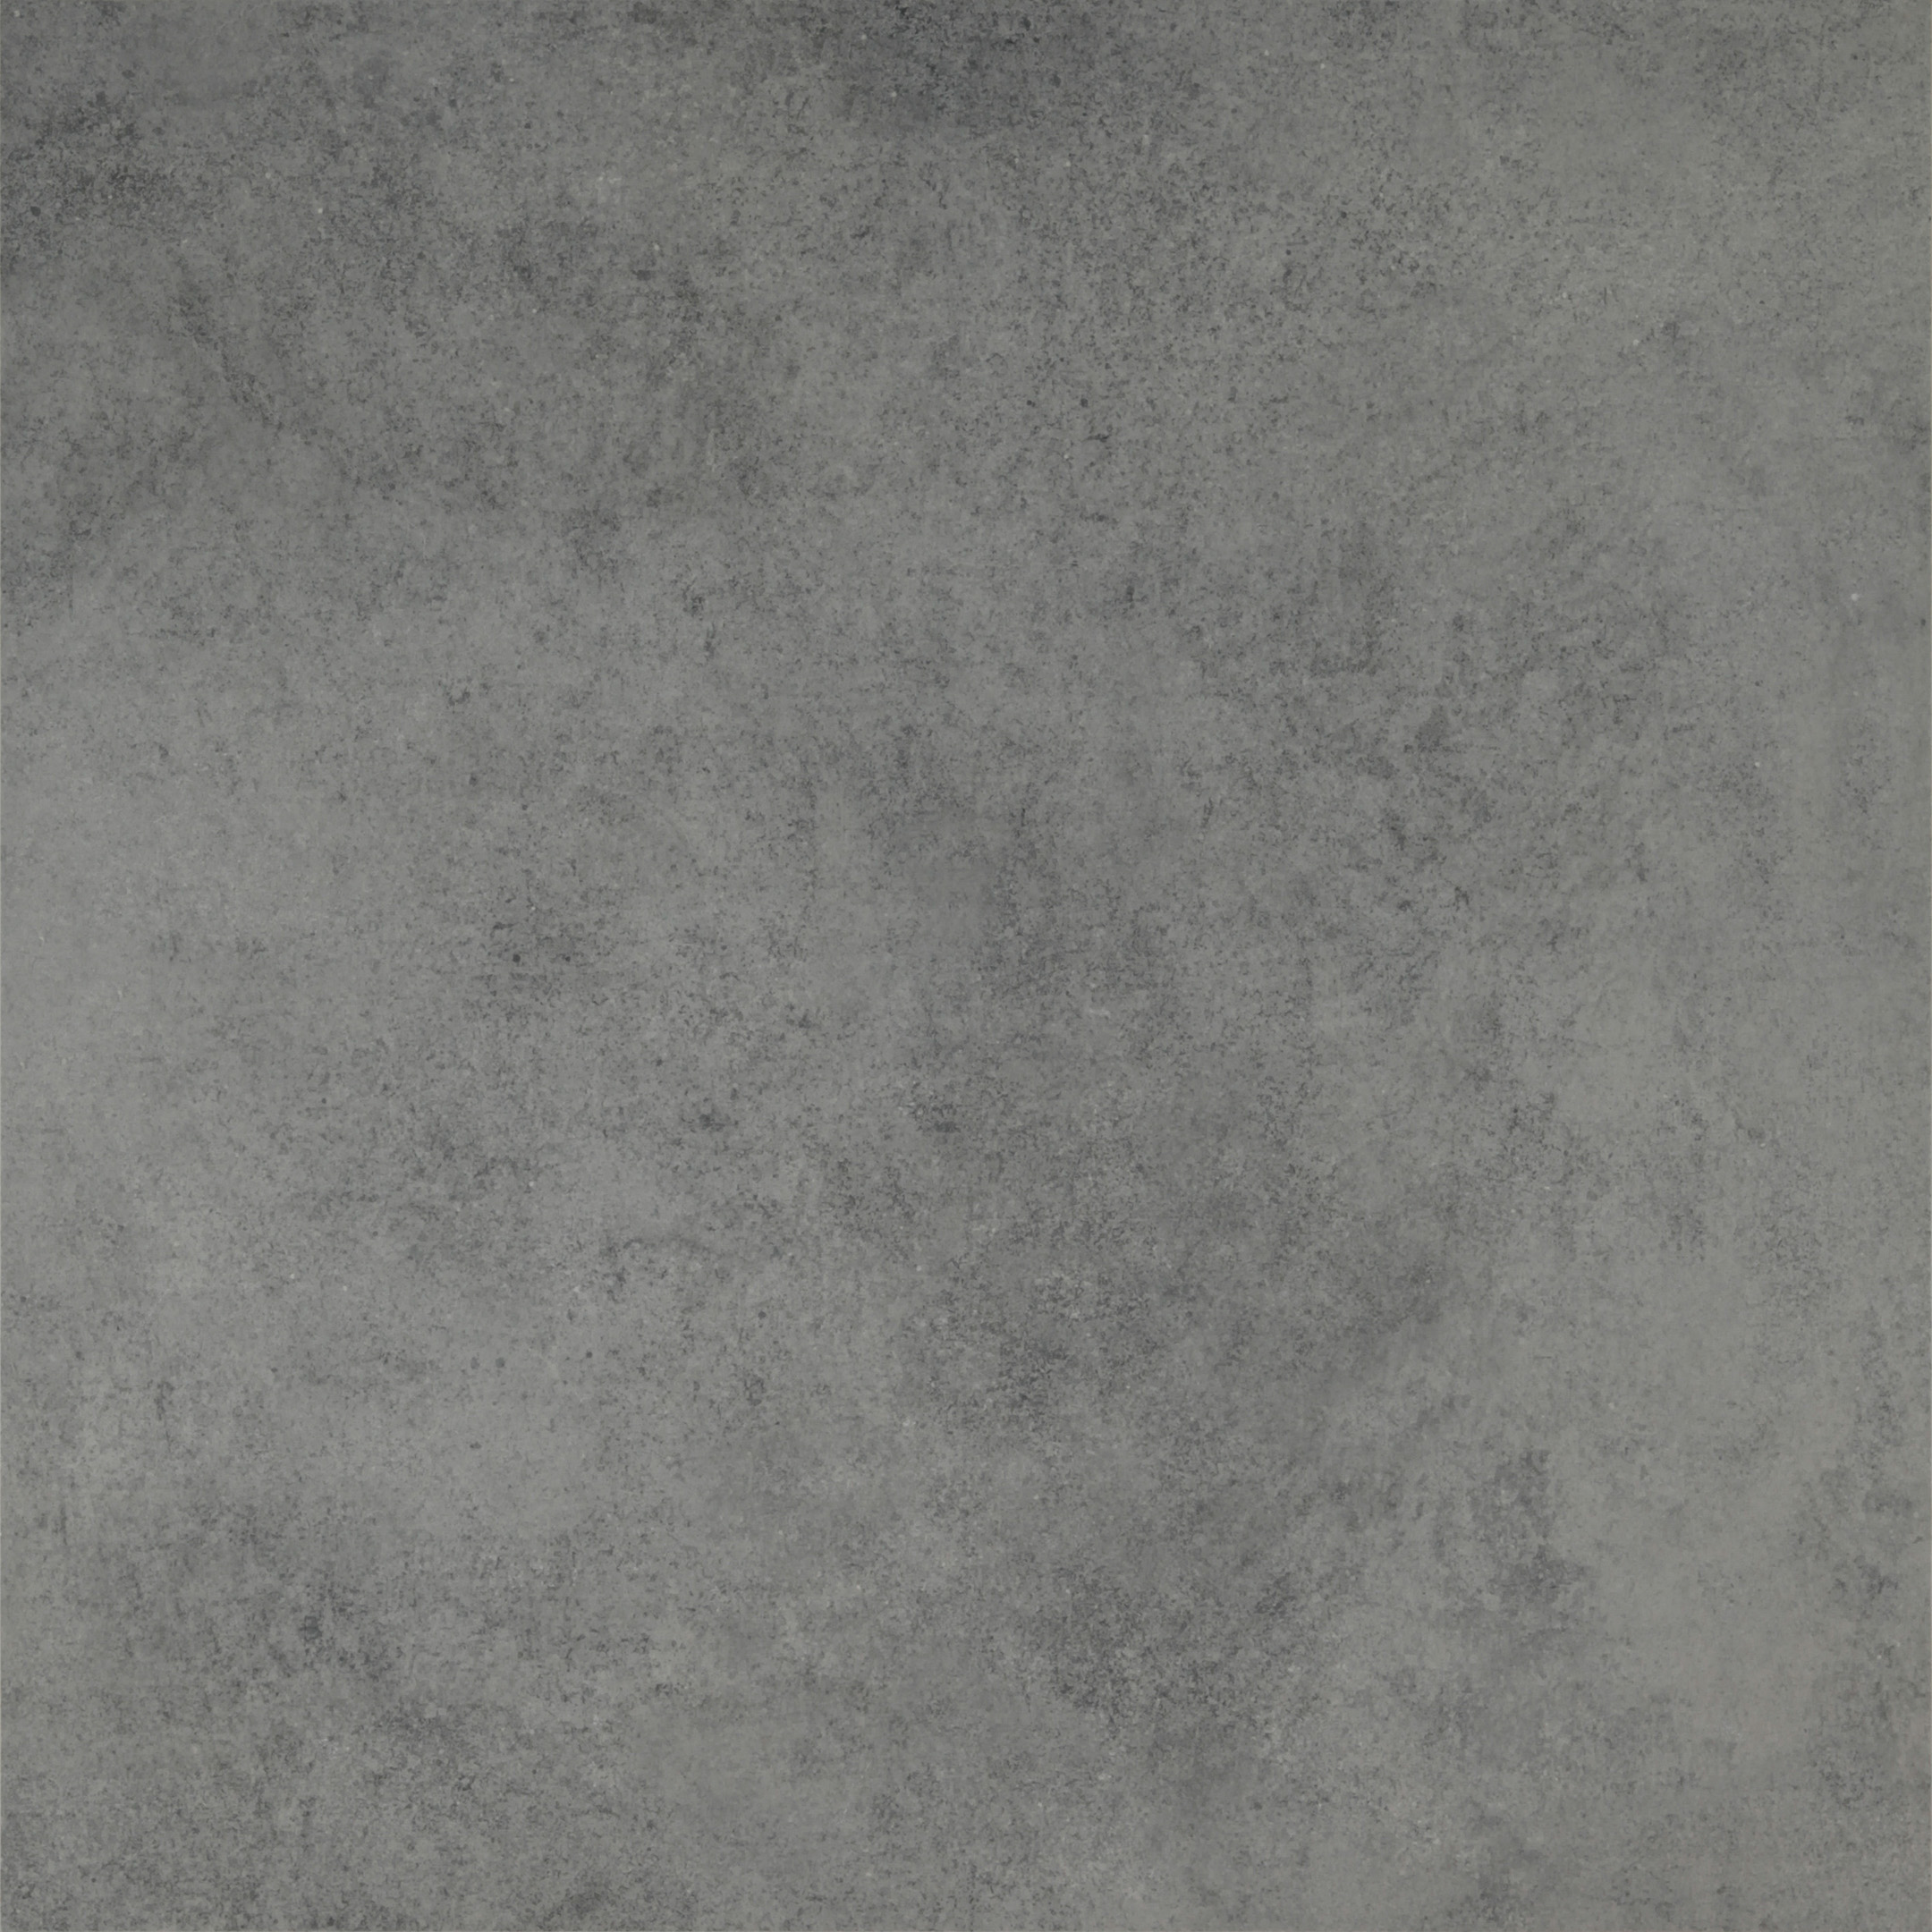 фото Керамогранит уг гранитея таганай темно-серый g345 матовый 600х600х10 мм (4 шт.=1,44 кв.м)